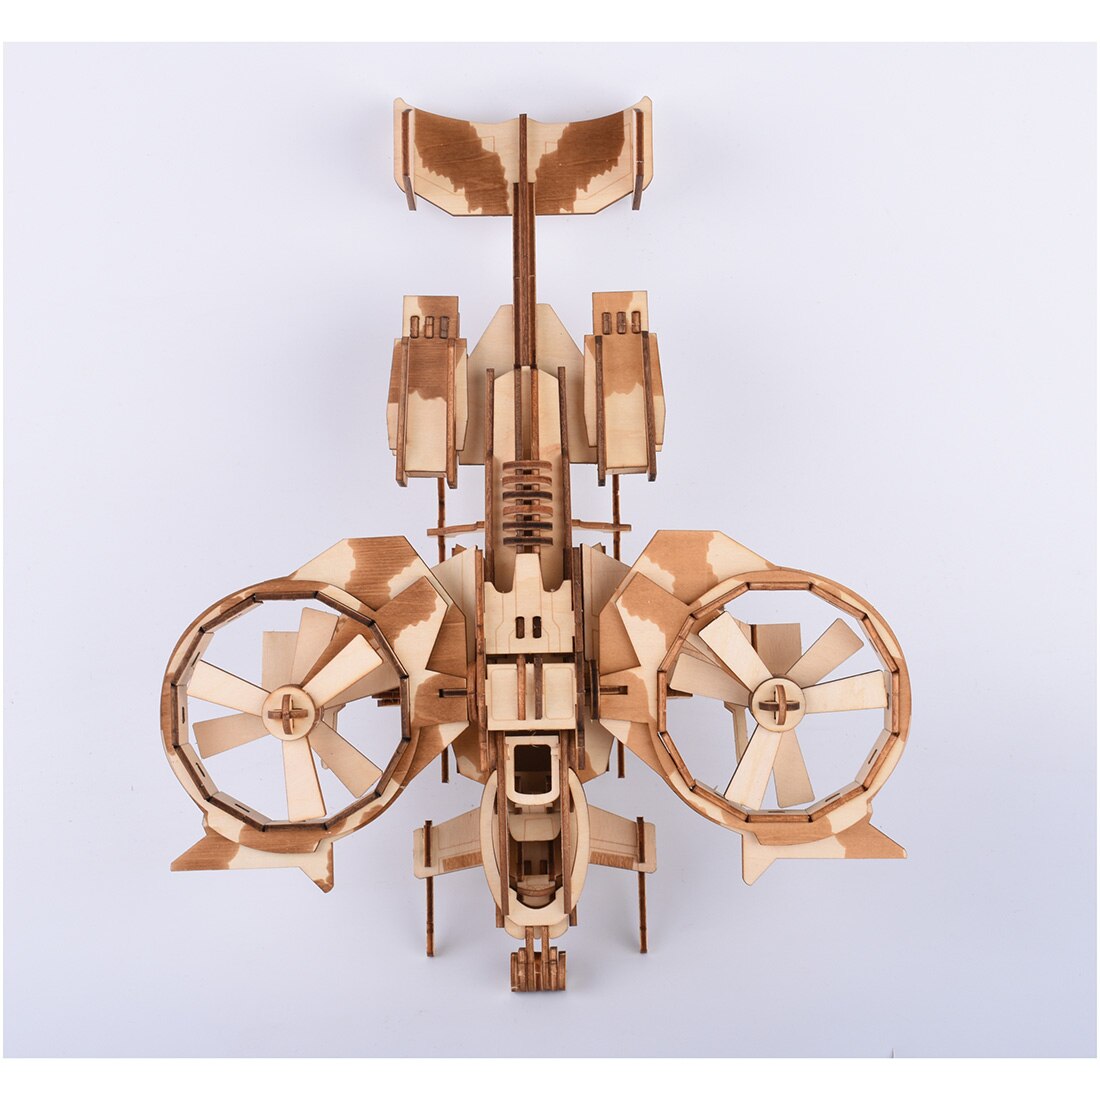 DIY 3D Wooden Jigsaw Airplaine Toys Model Kits